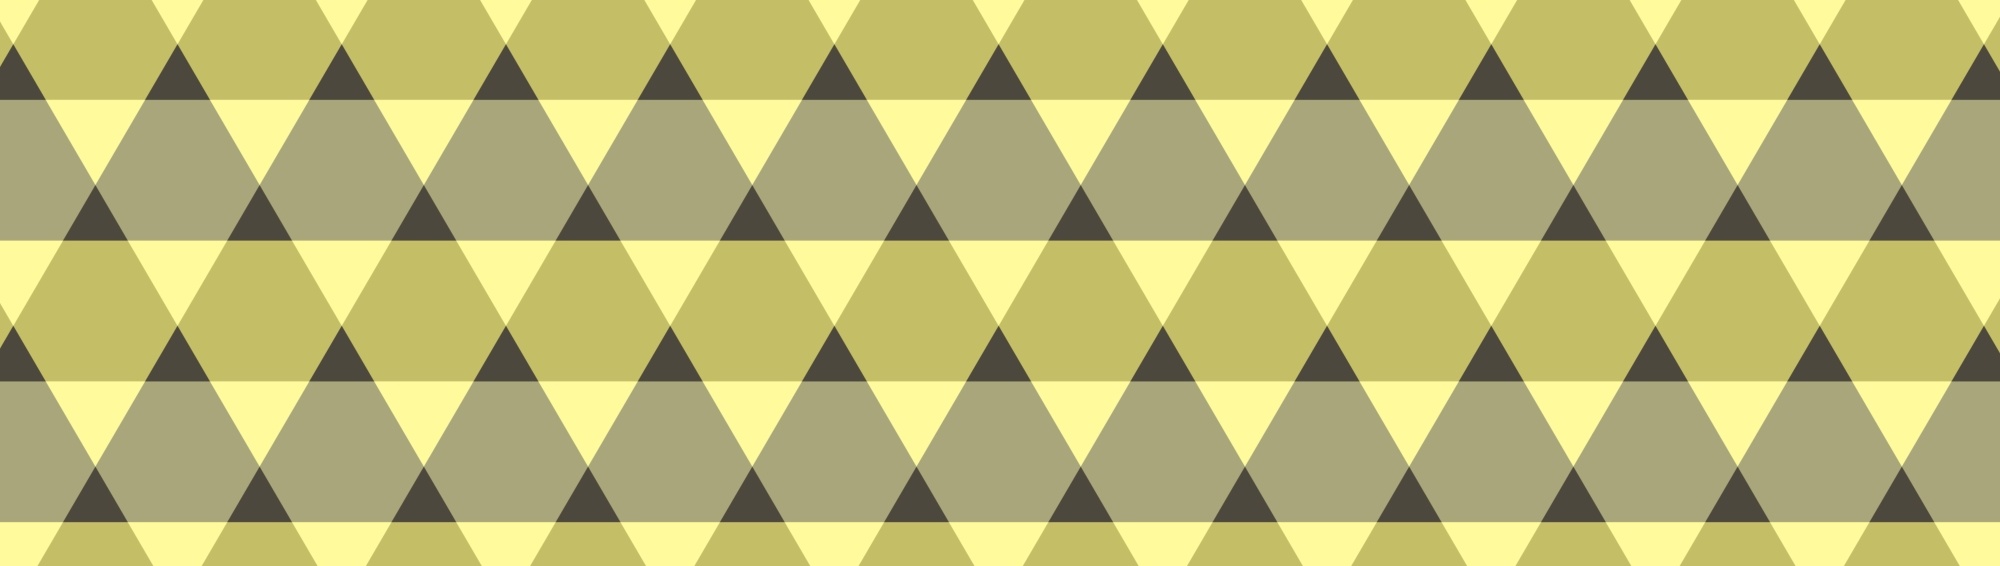 Yellow Triangles Pattern